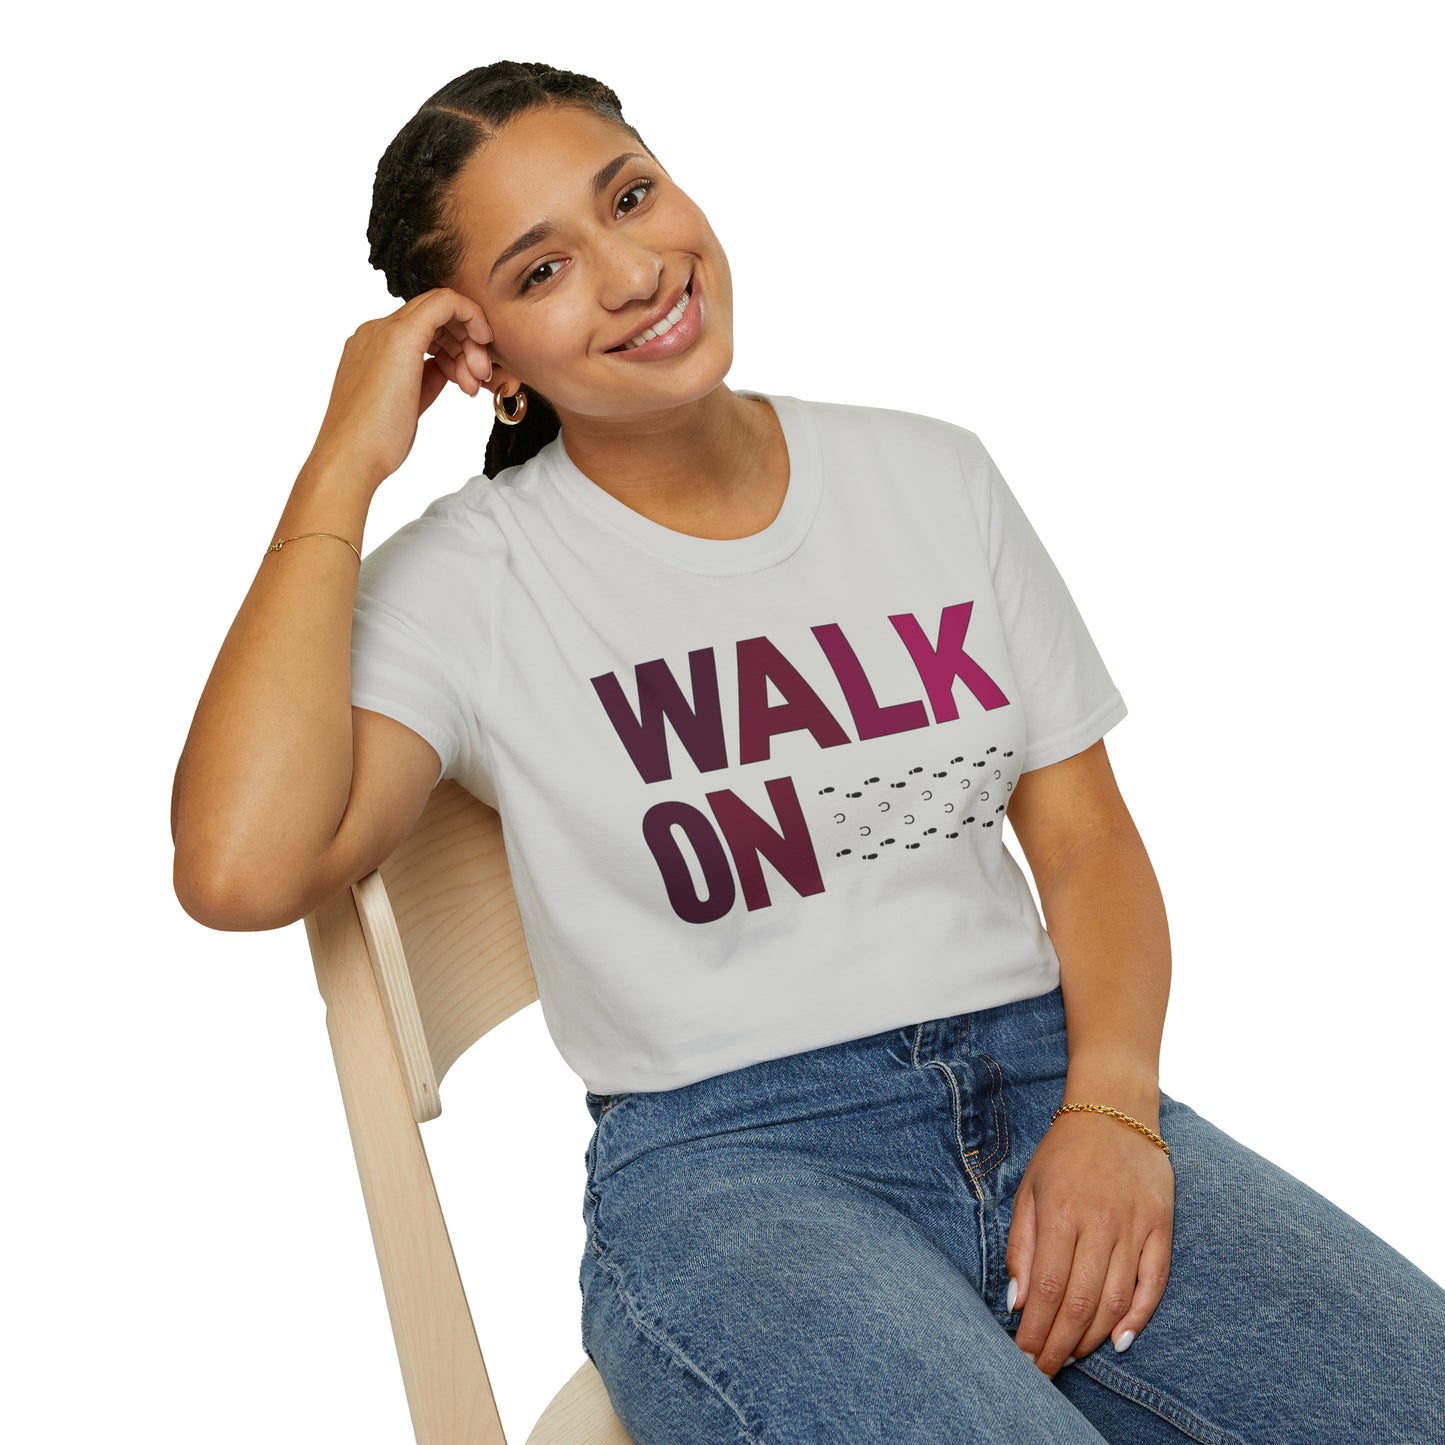 WALK ON- hoof and foot prints - unisex short sleeve t-shirt